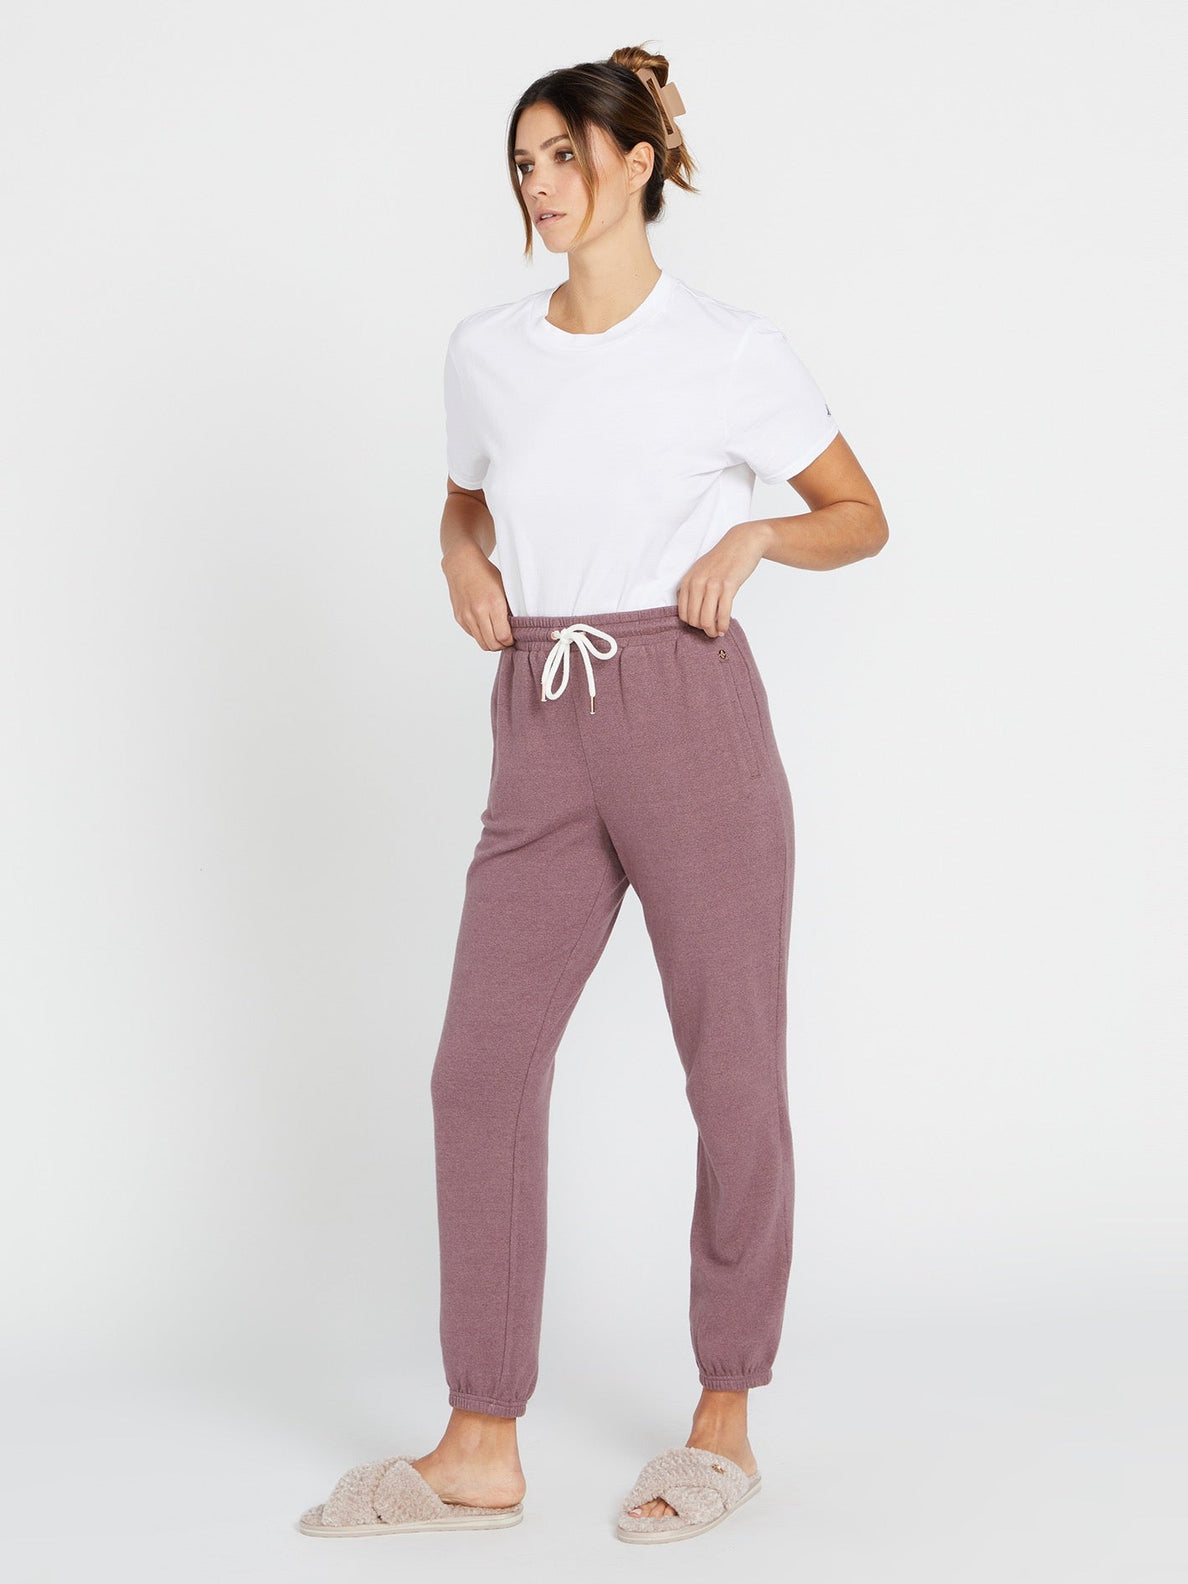 ALKOF women's athletic pants Drawstring Waist Solid Sweatpants